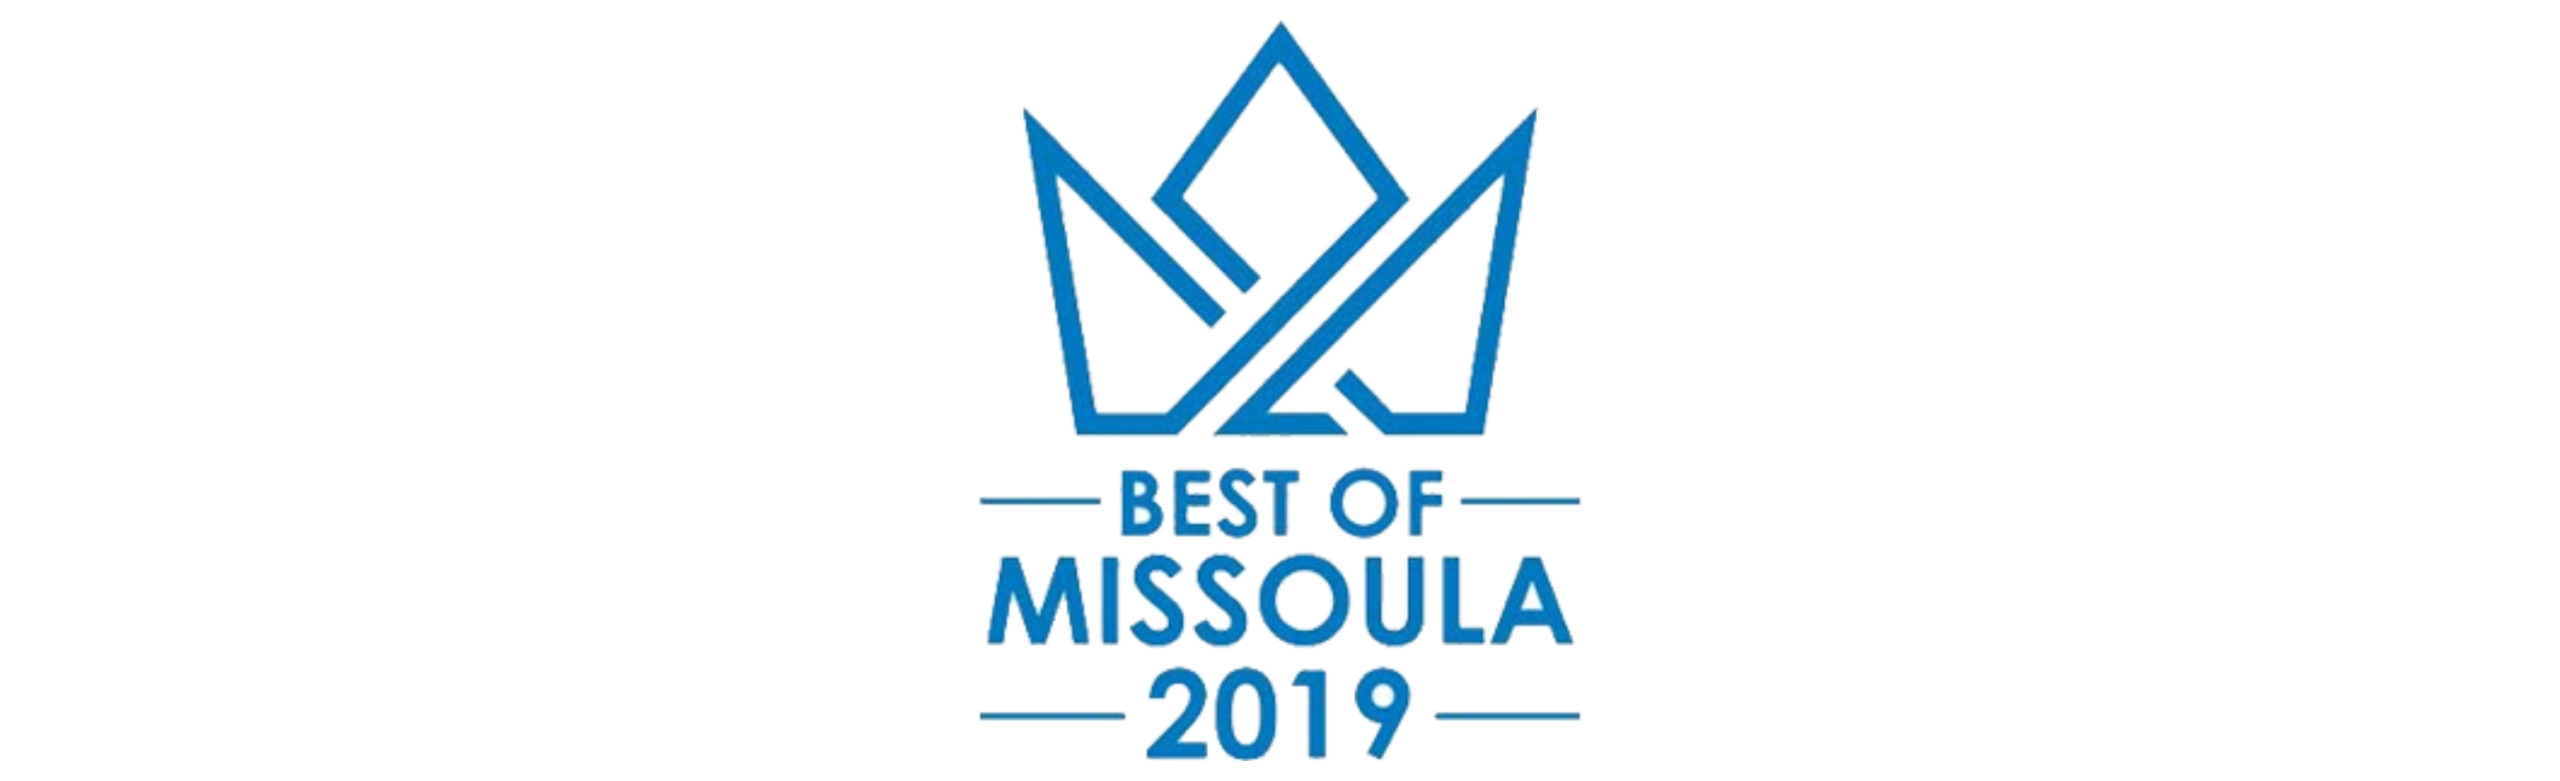 Best of Missoula 2019: Vote for Your Favorites Image